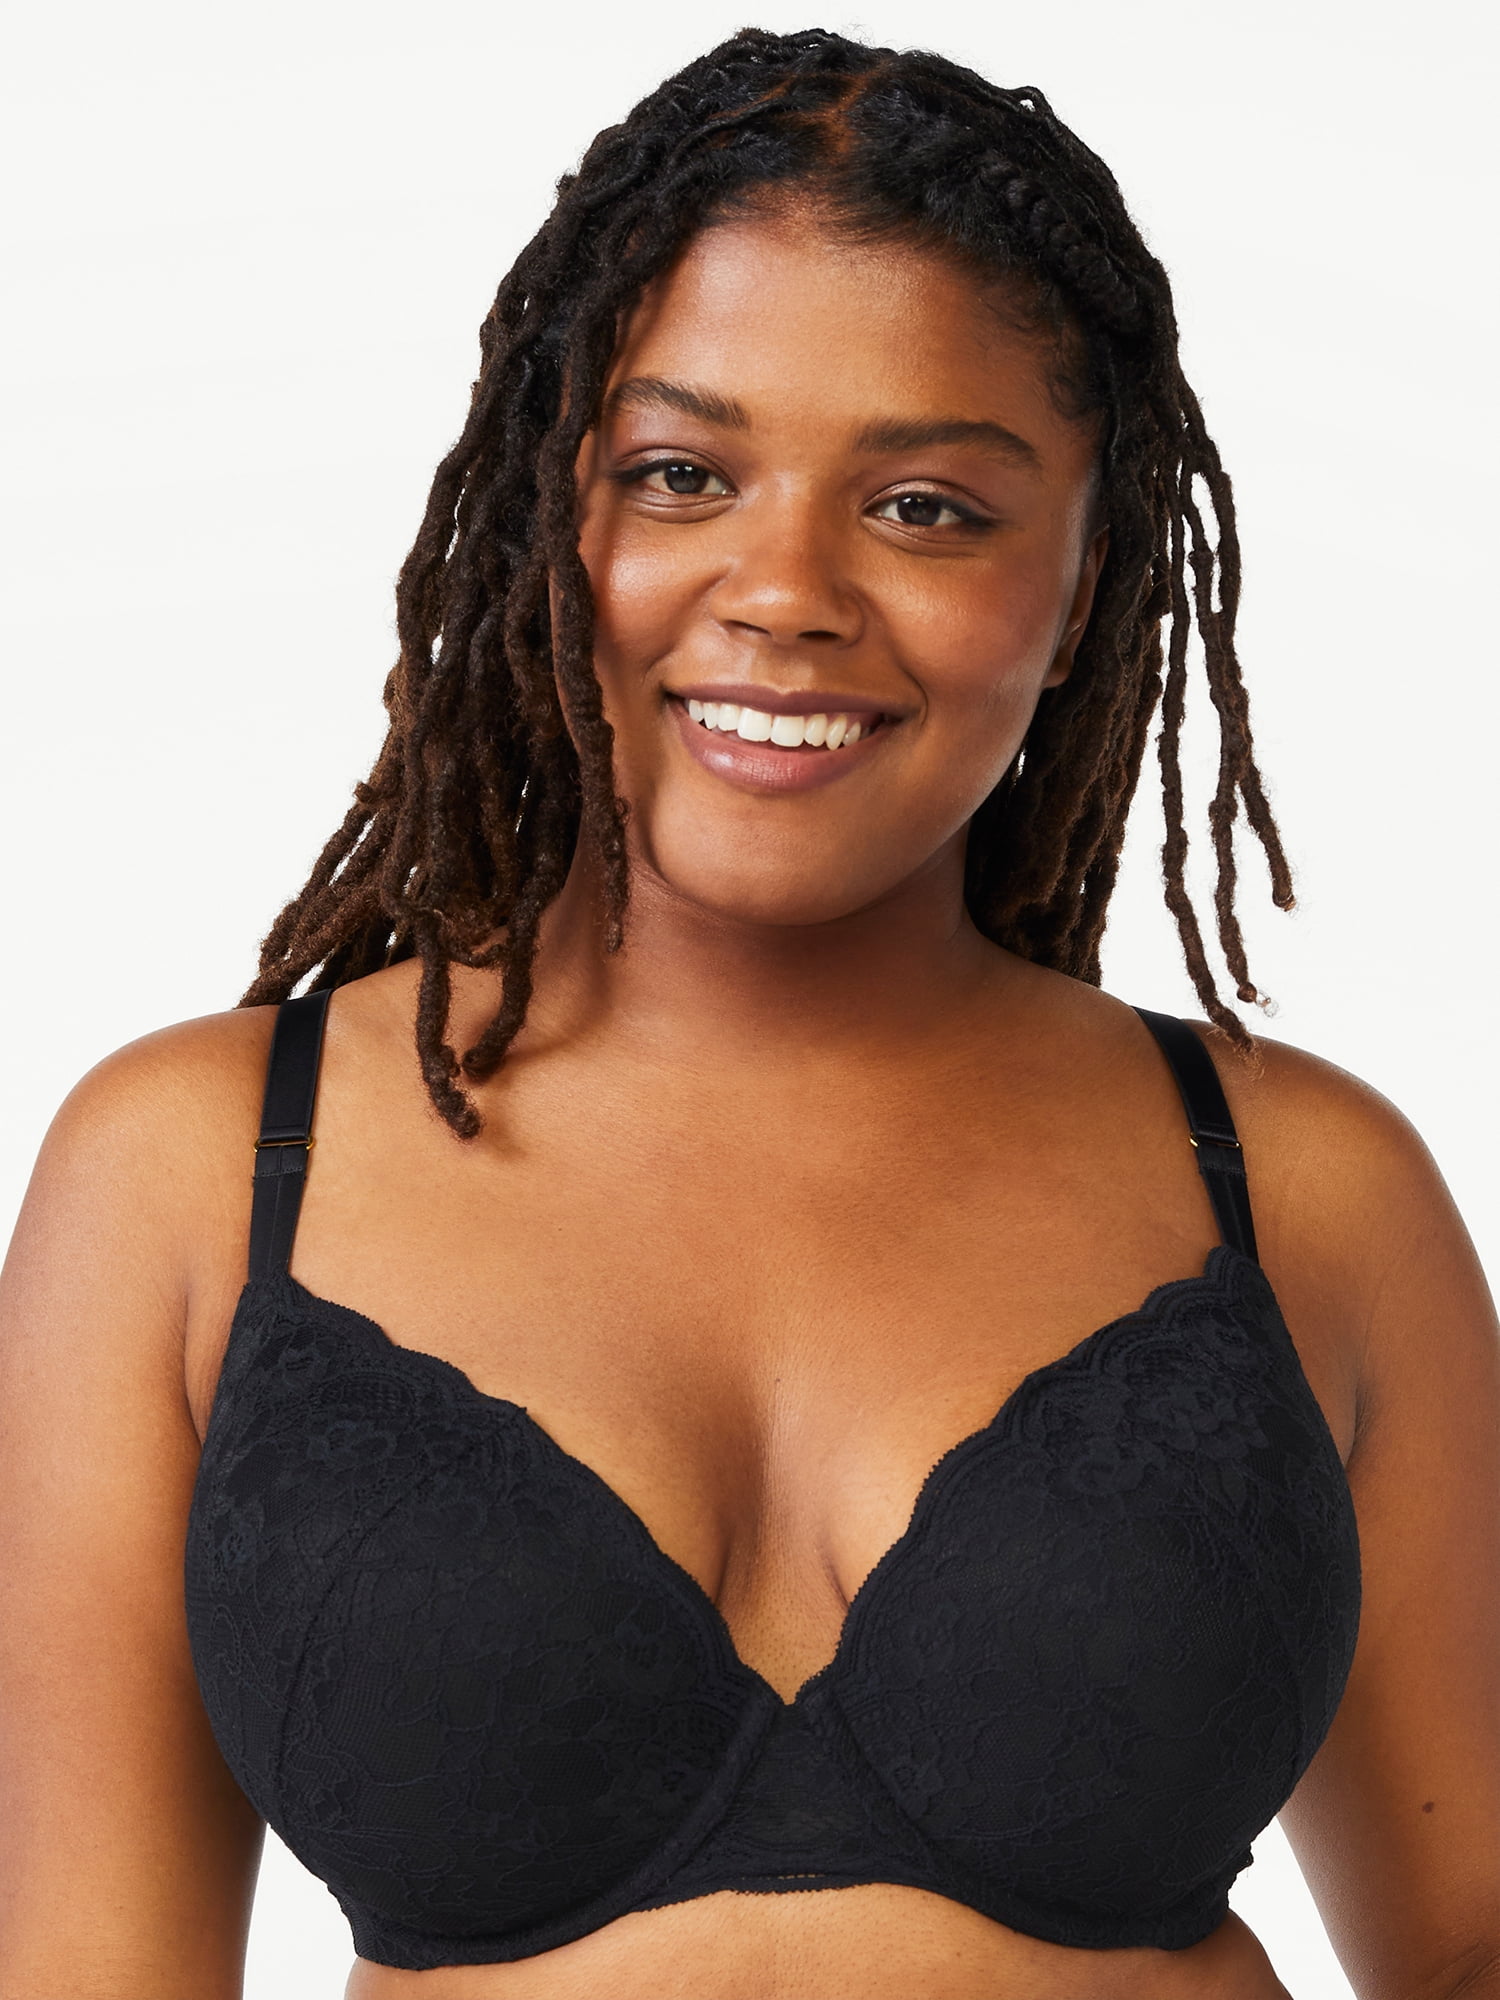 Lasso womens push-up push up bra, black, 40 eu: Buy Online at Best